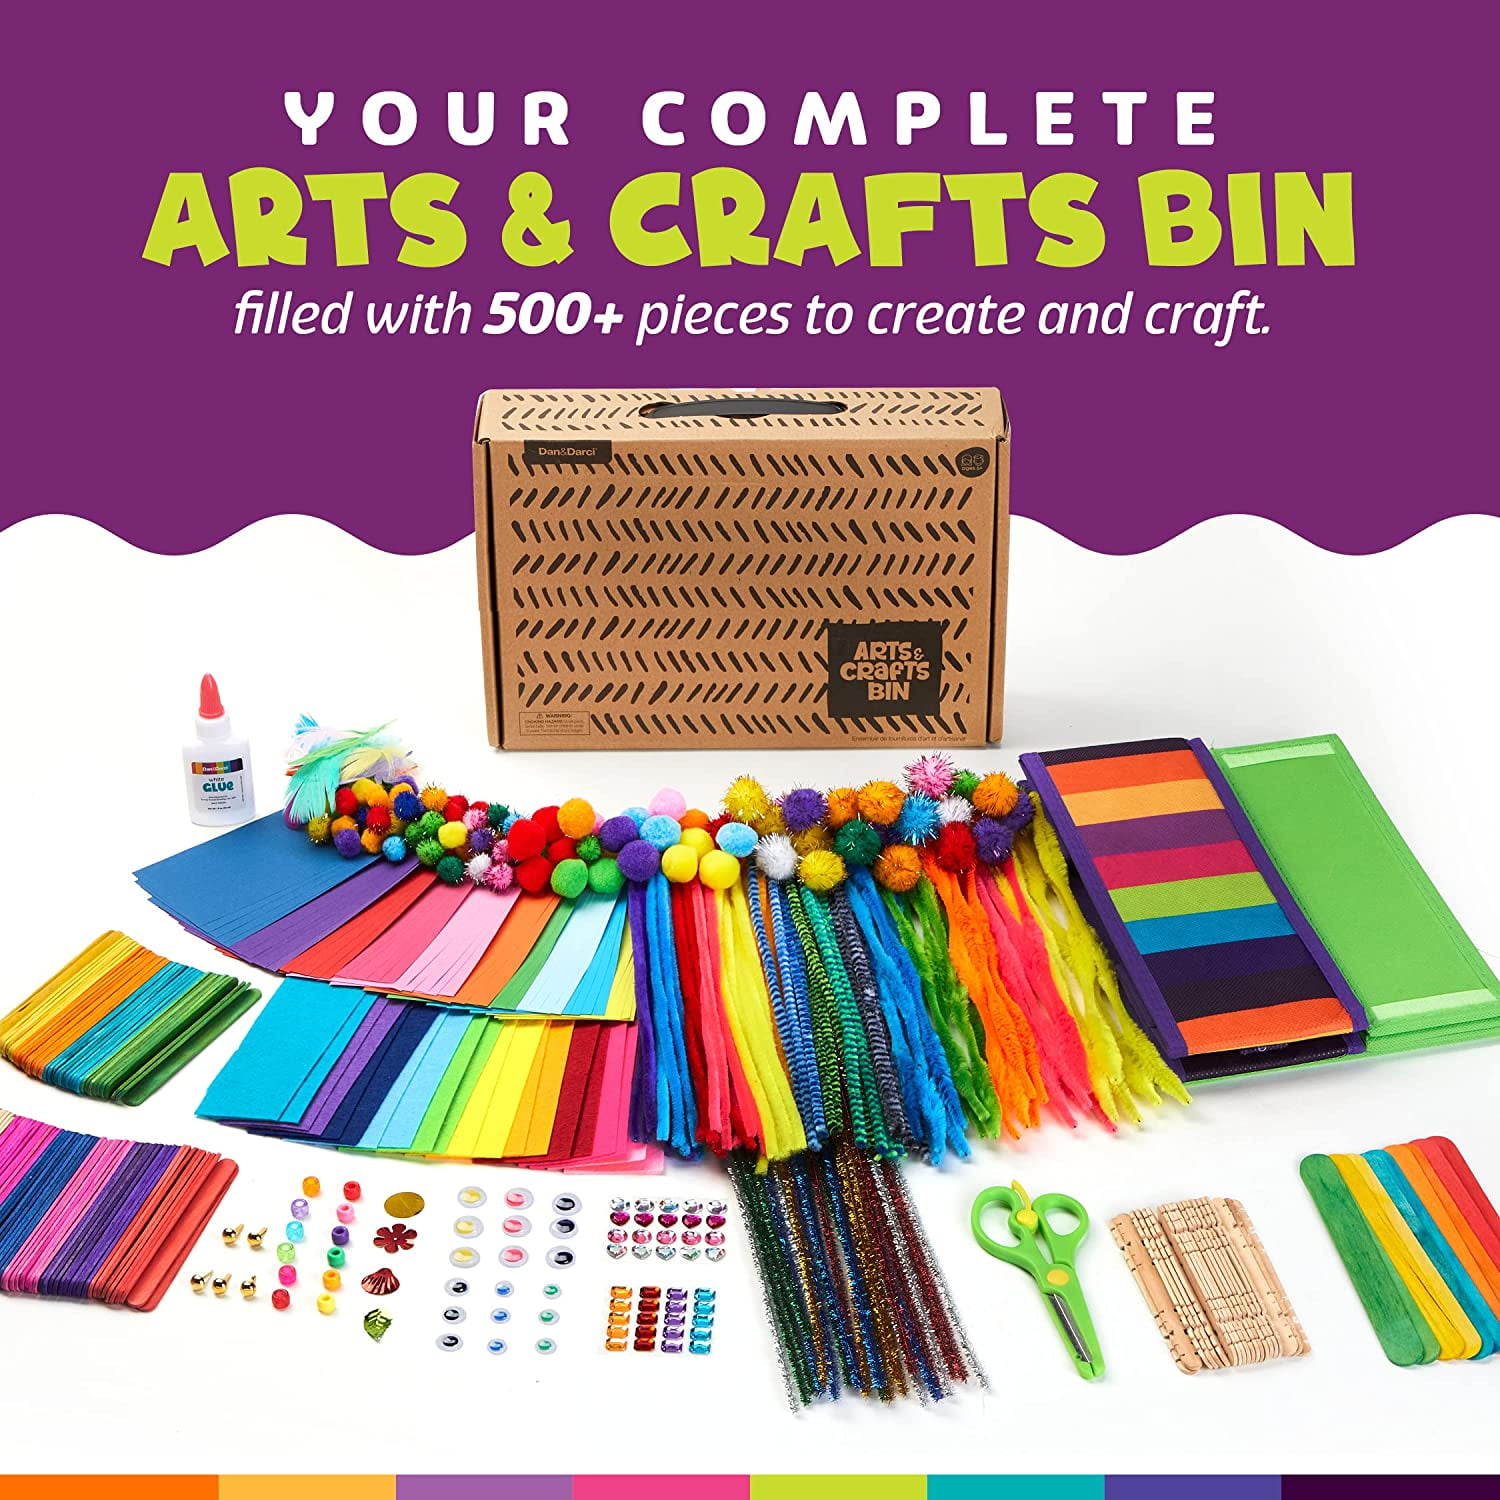  Darice Arts and Crafts Kit - 500+ Piece Kids Craft Supplies &  Materials, Art Supplies Box for Girls & Boys Age 4 5 6 7 8 9 : Automotive